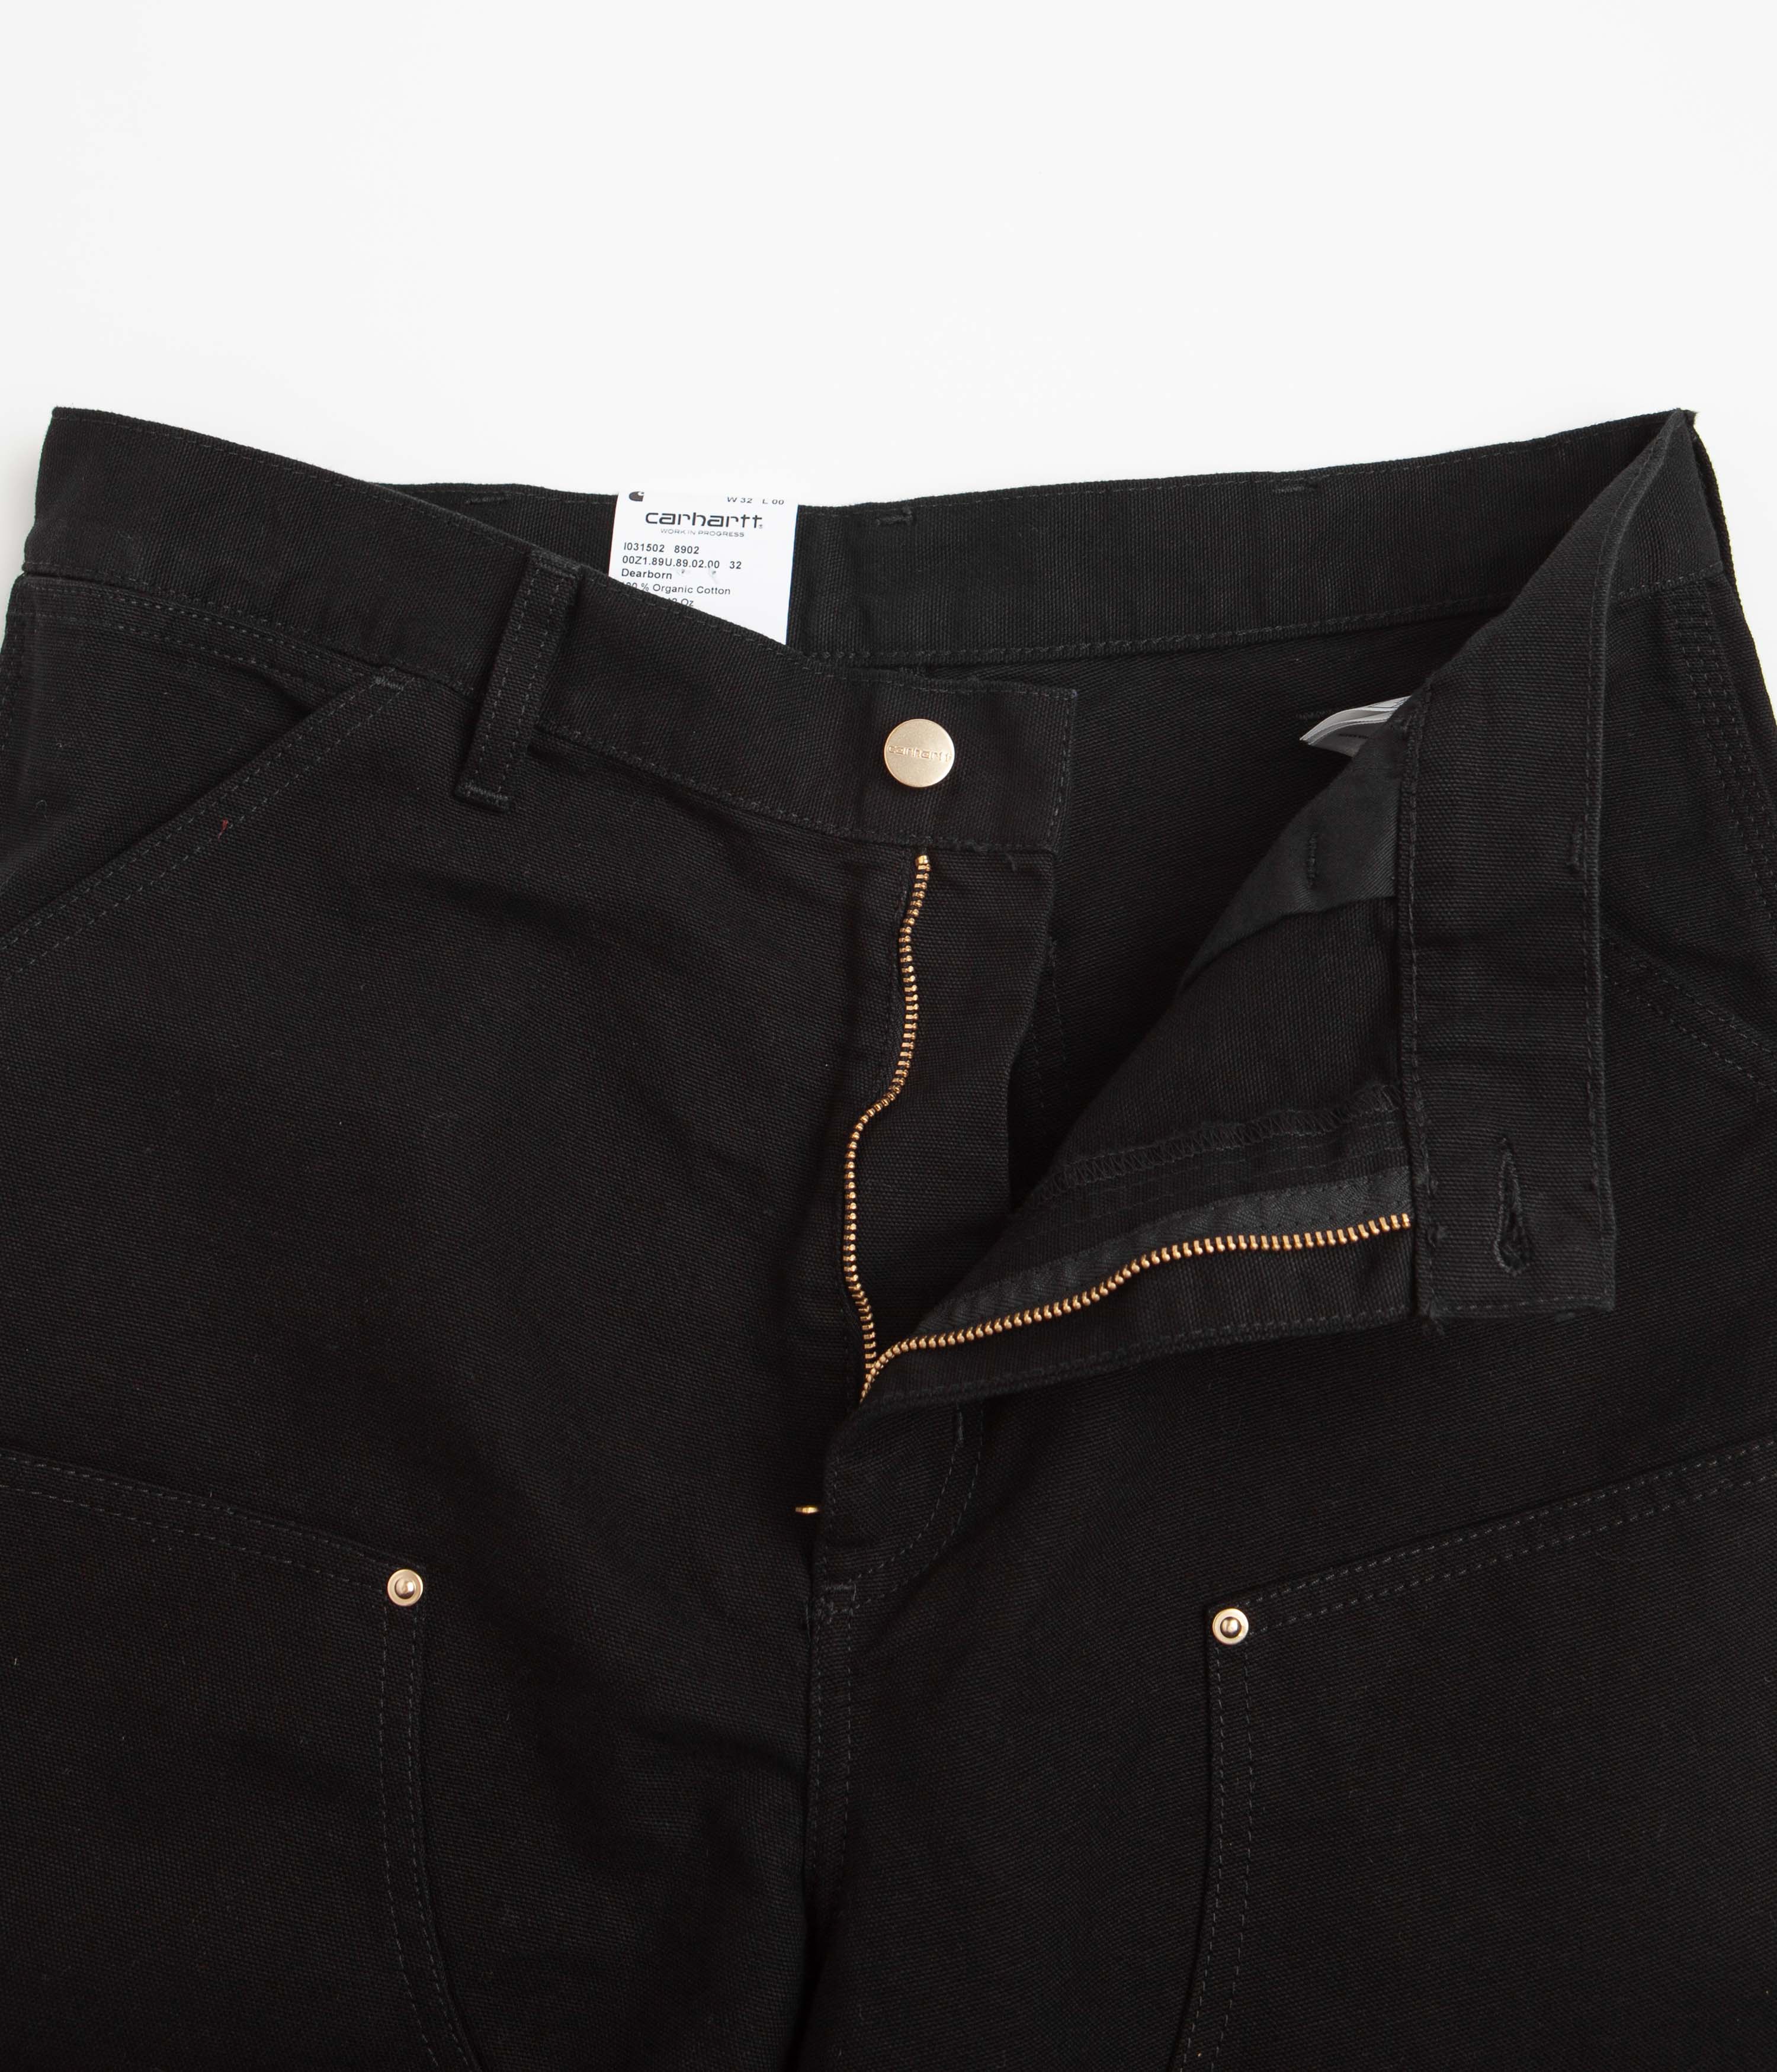 Carhartt Double Knee Shorts - Black | Flatspot